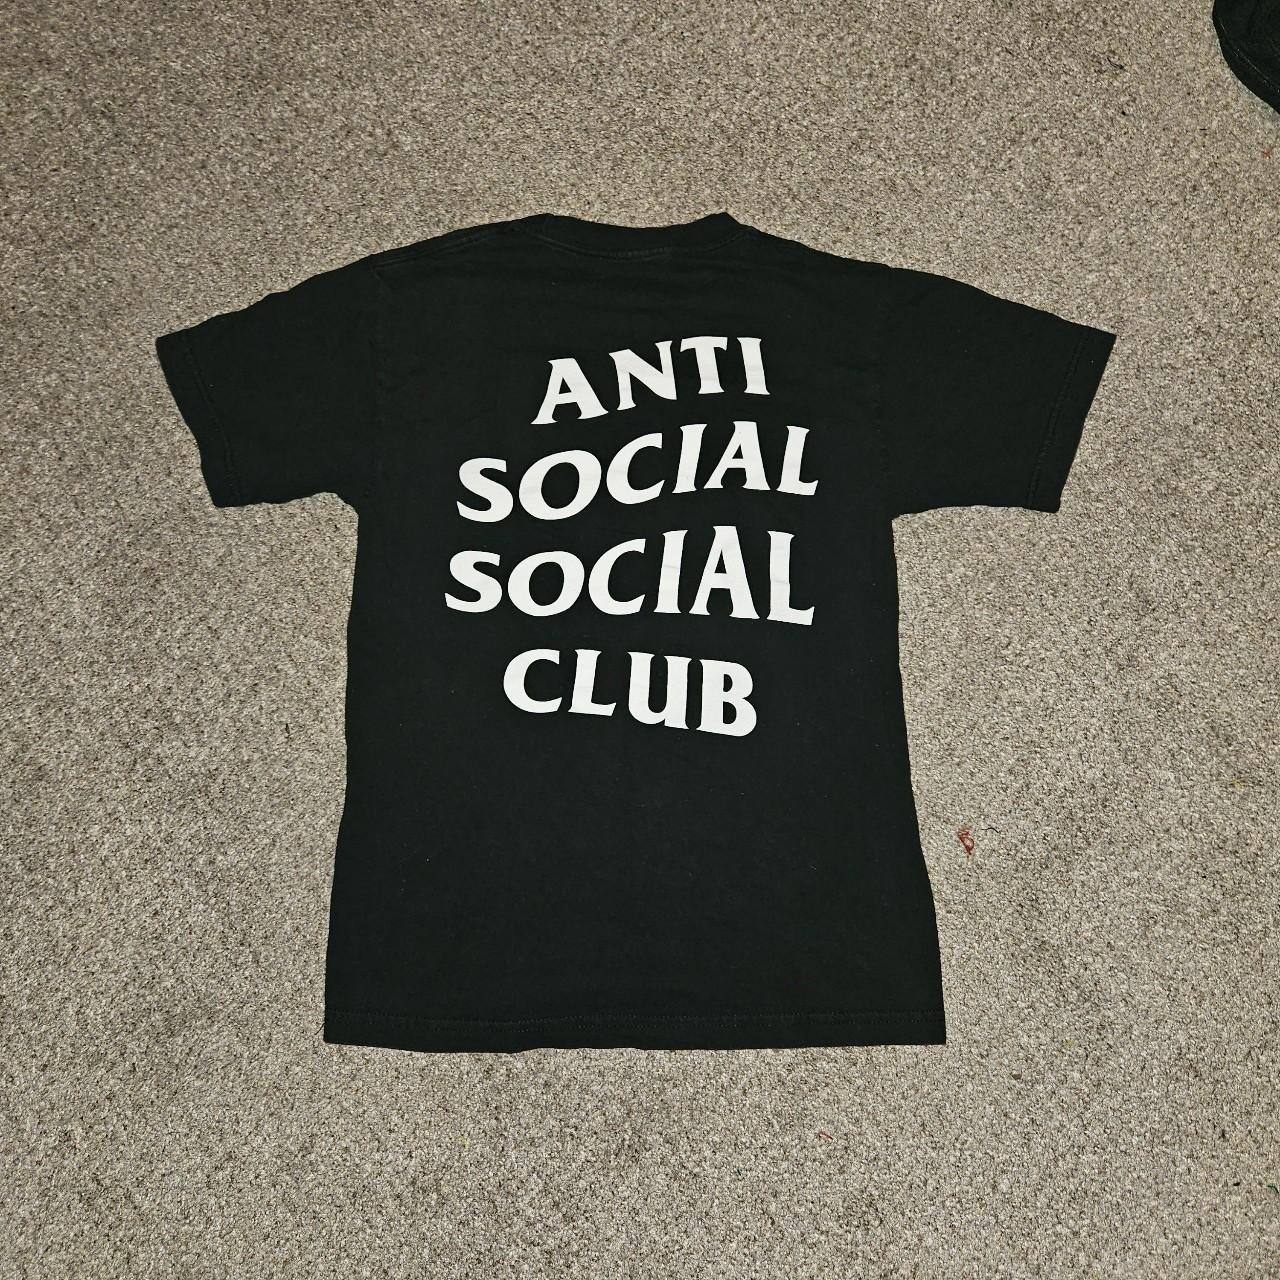 Anti Social Social Club Men's Black and White T-shirt